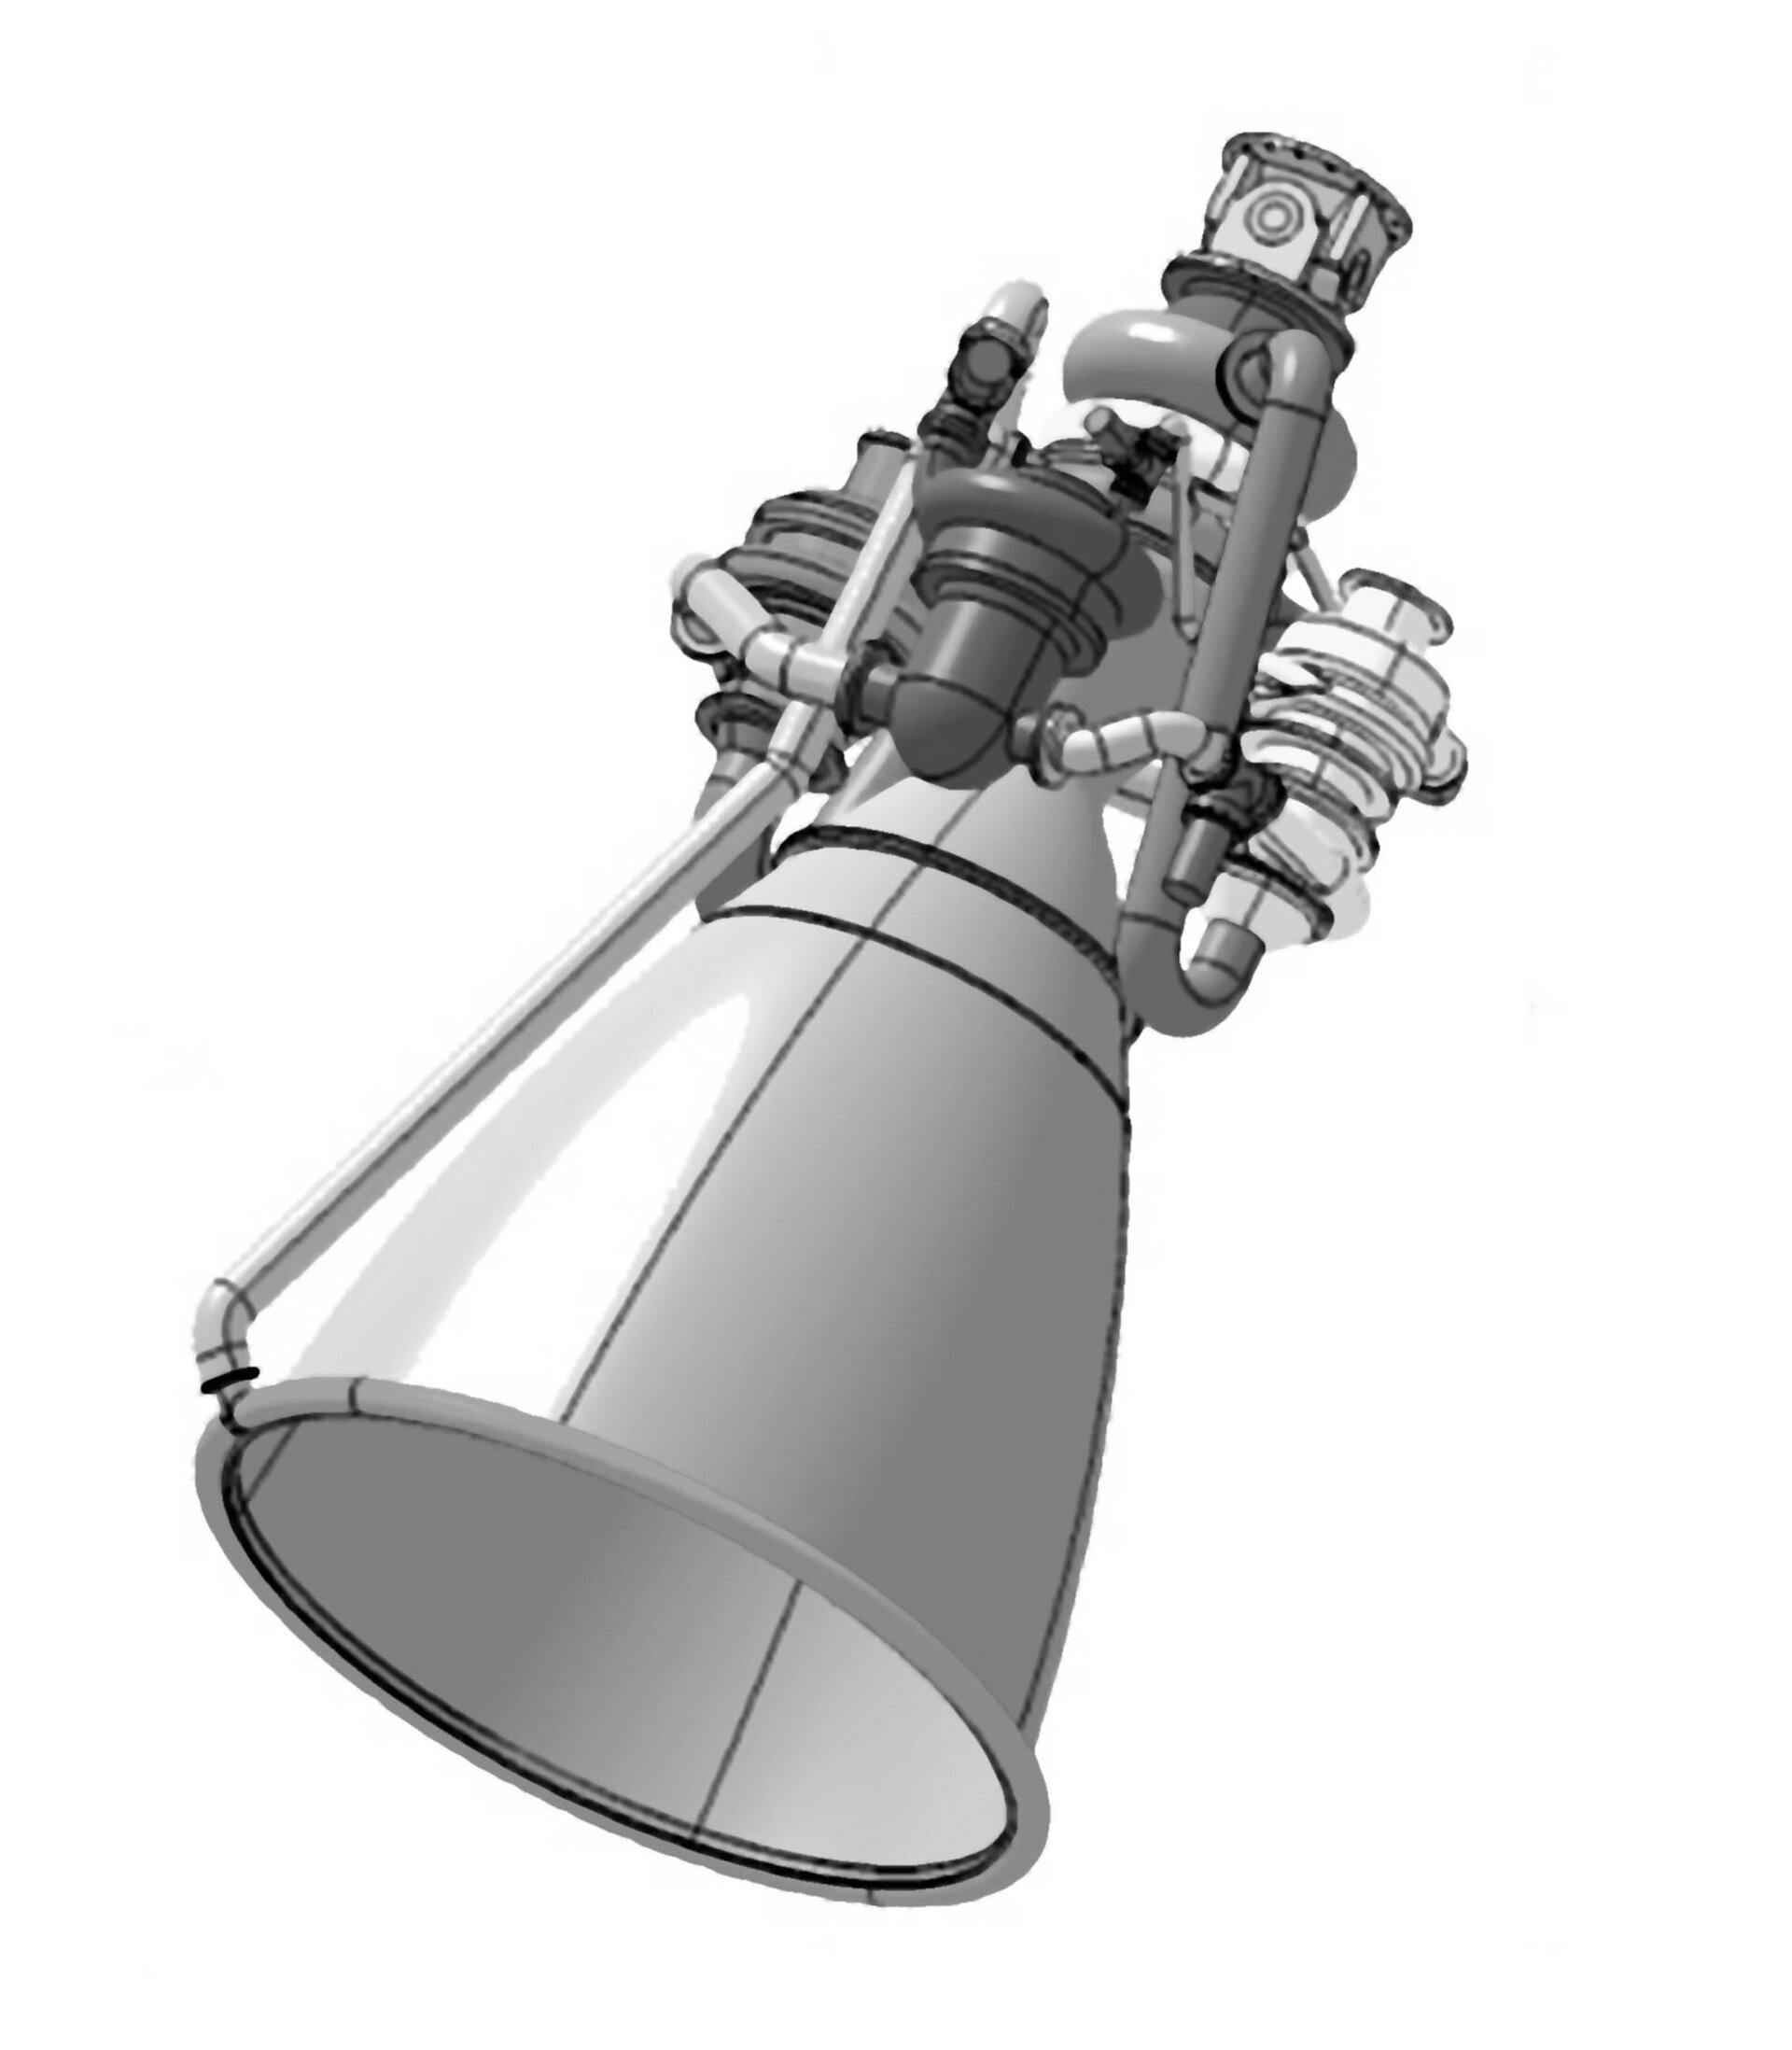 Illustration of the High Thrust Engine Demonstrator